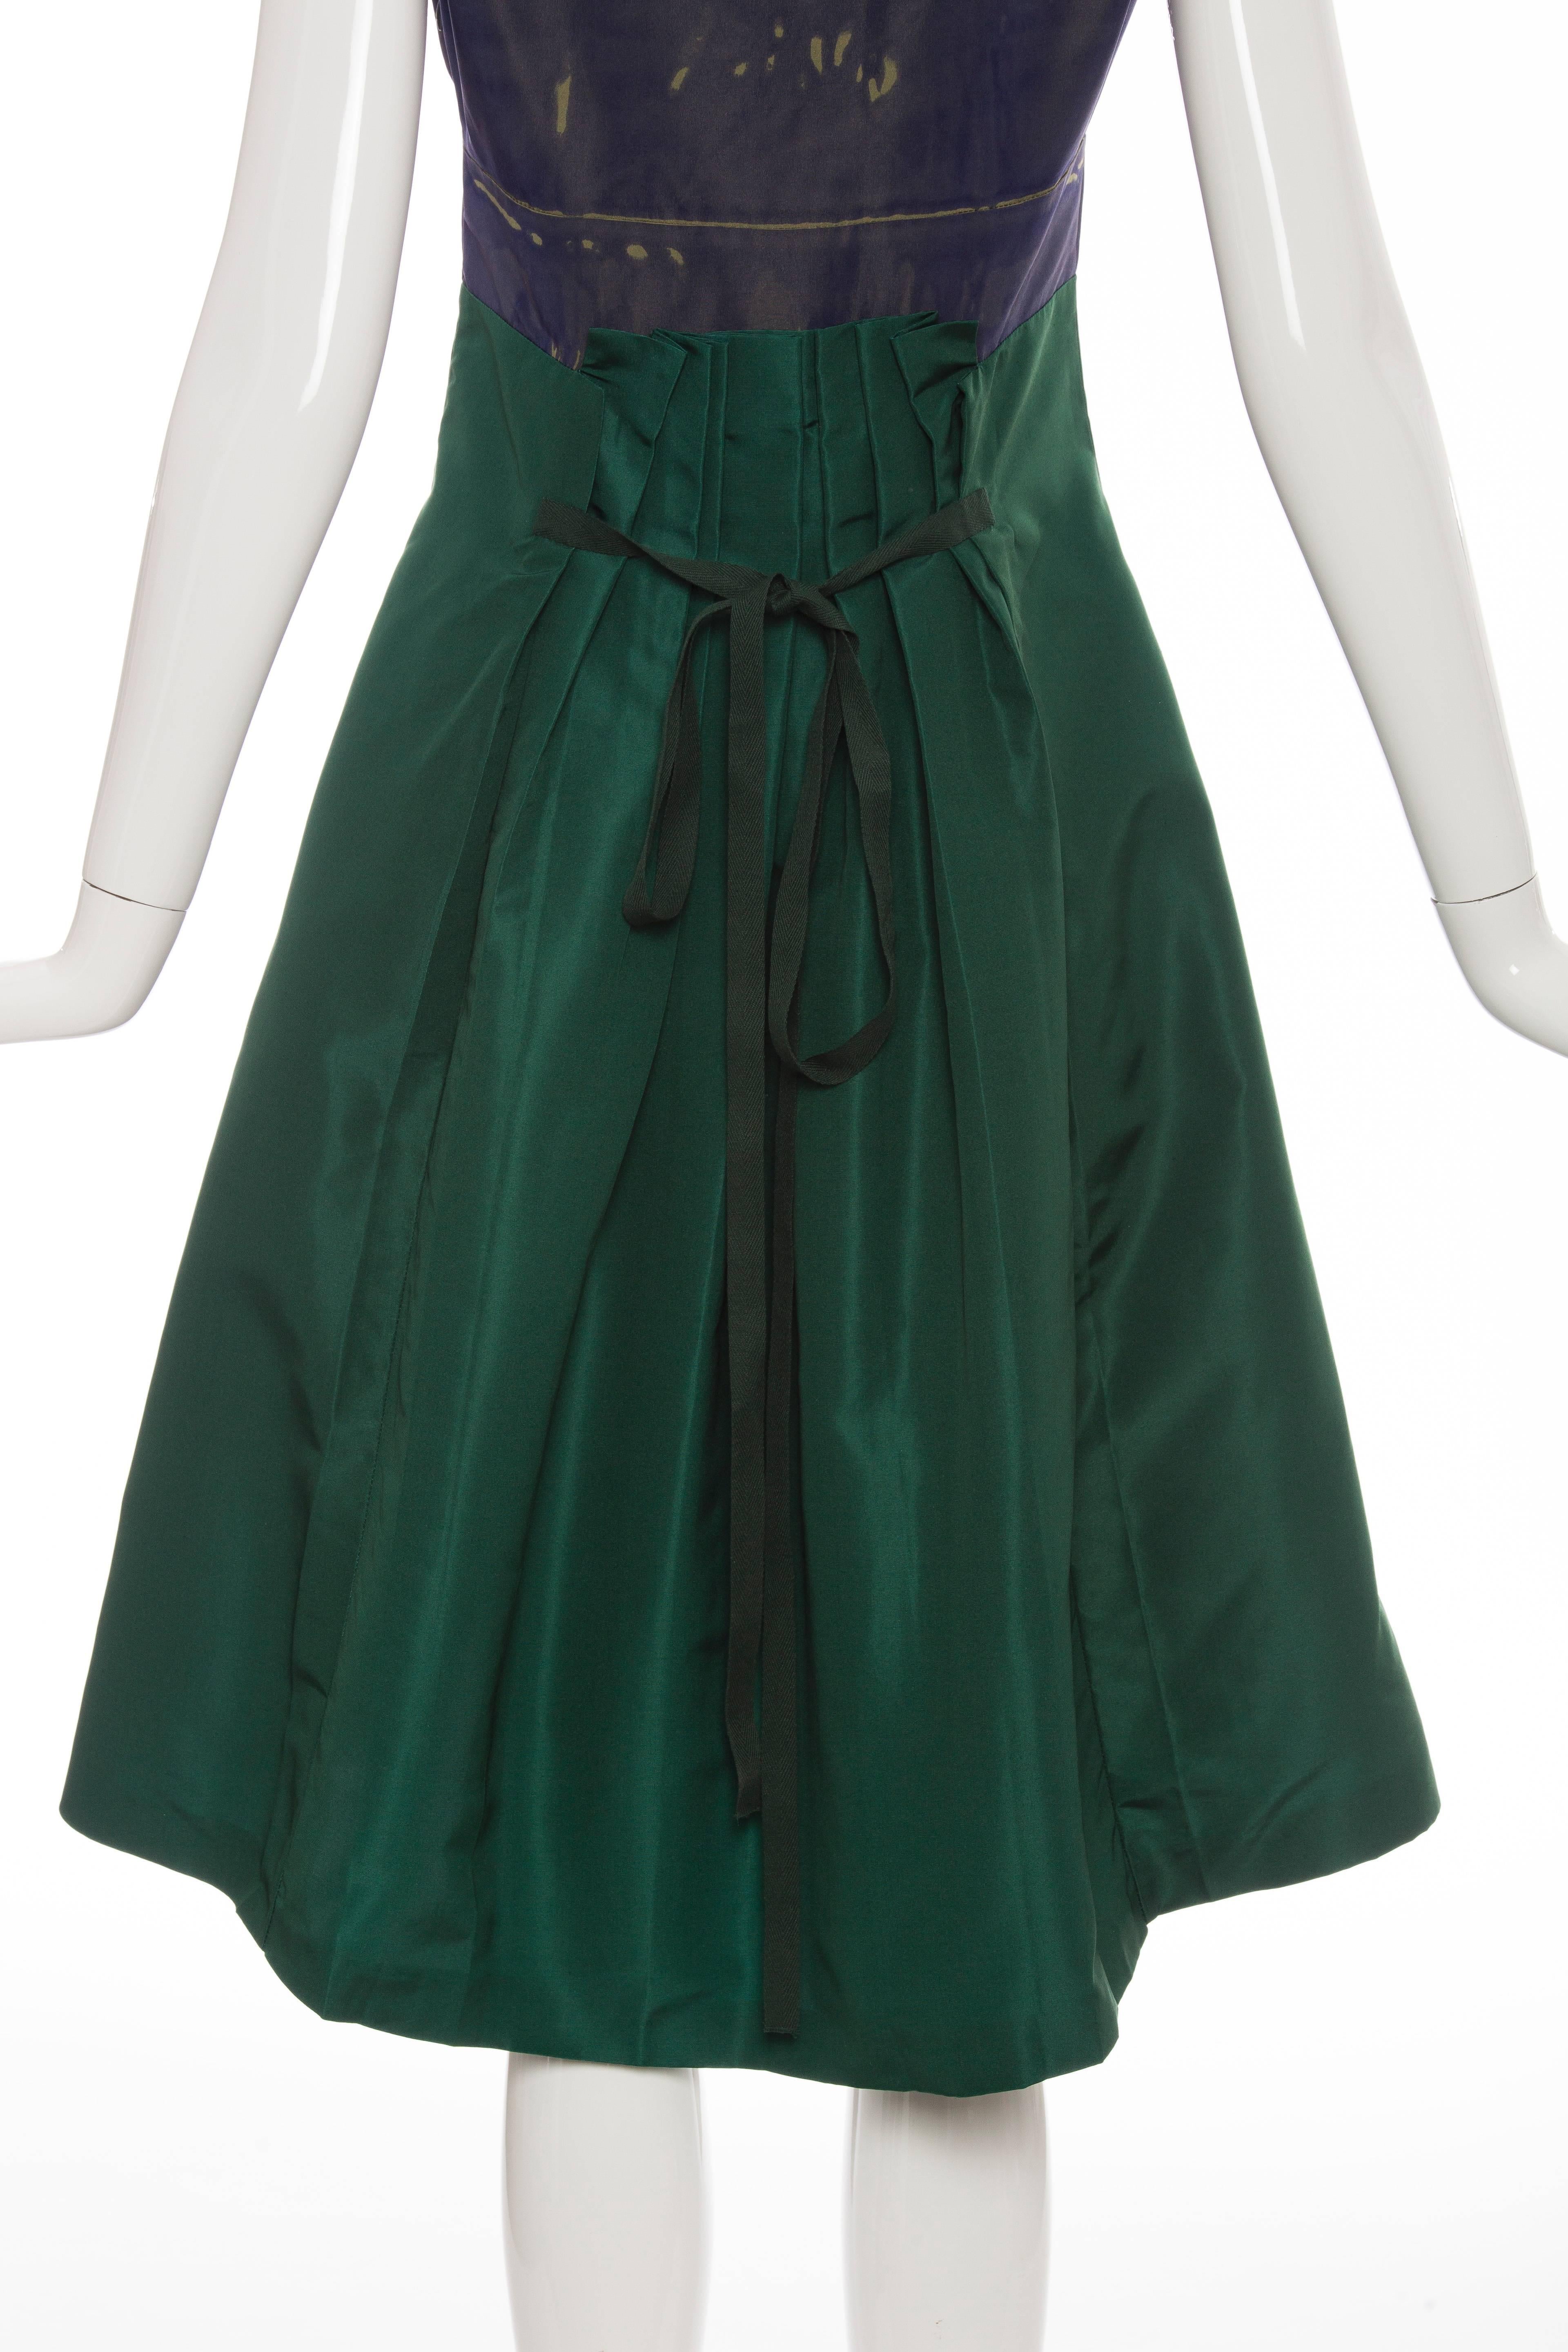 Prada Silk Appliquéd Dress, Spring - Summer 2005 1